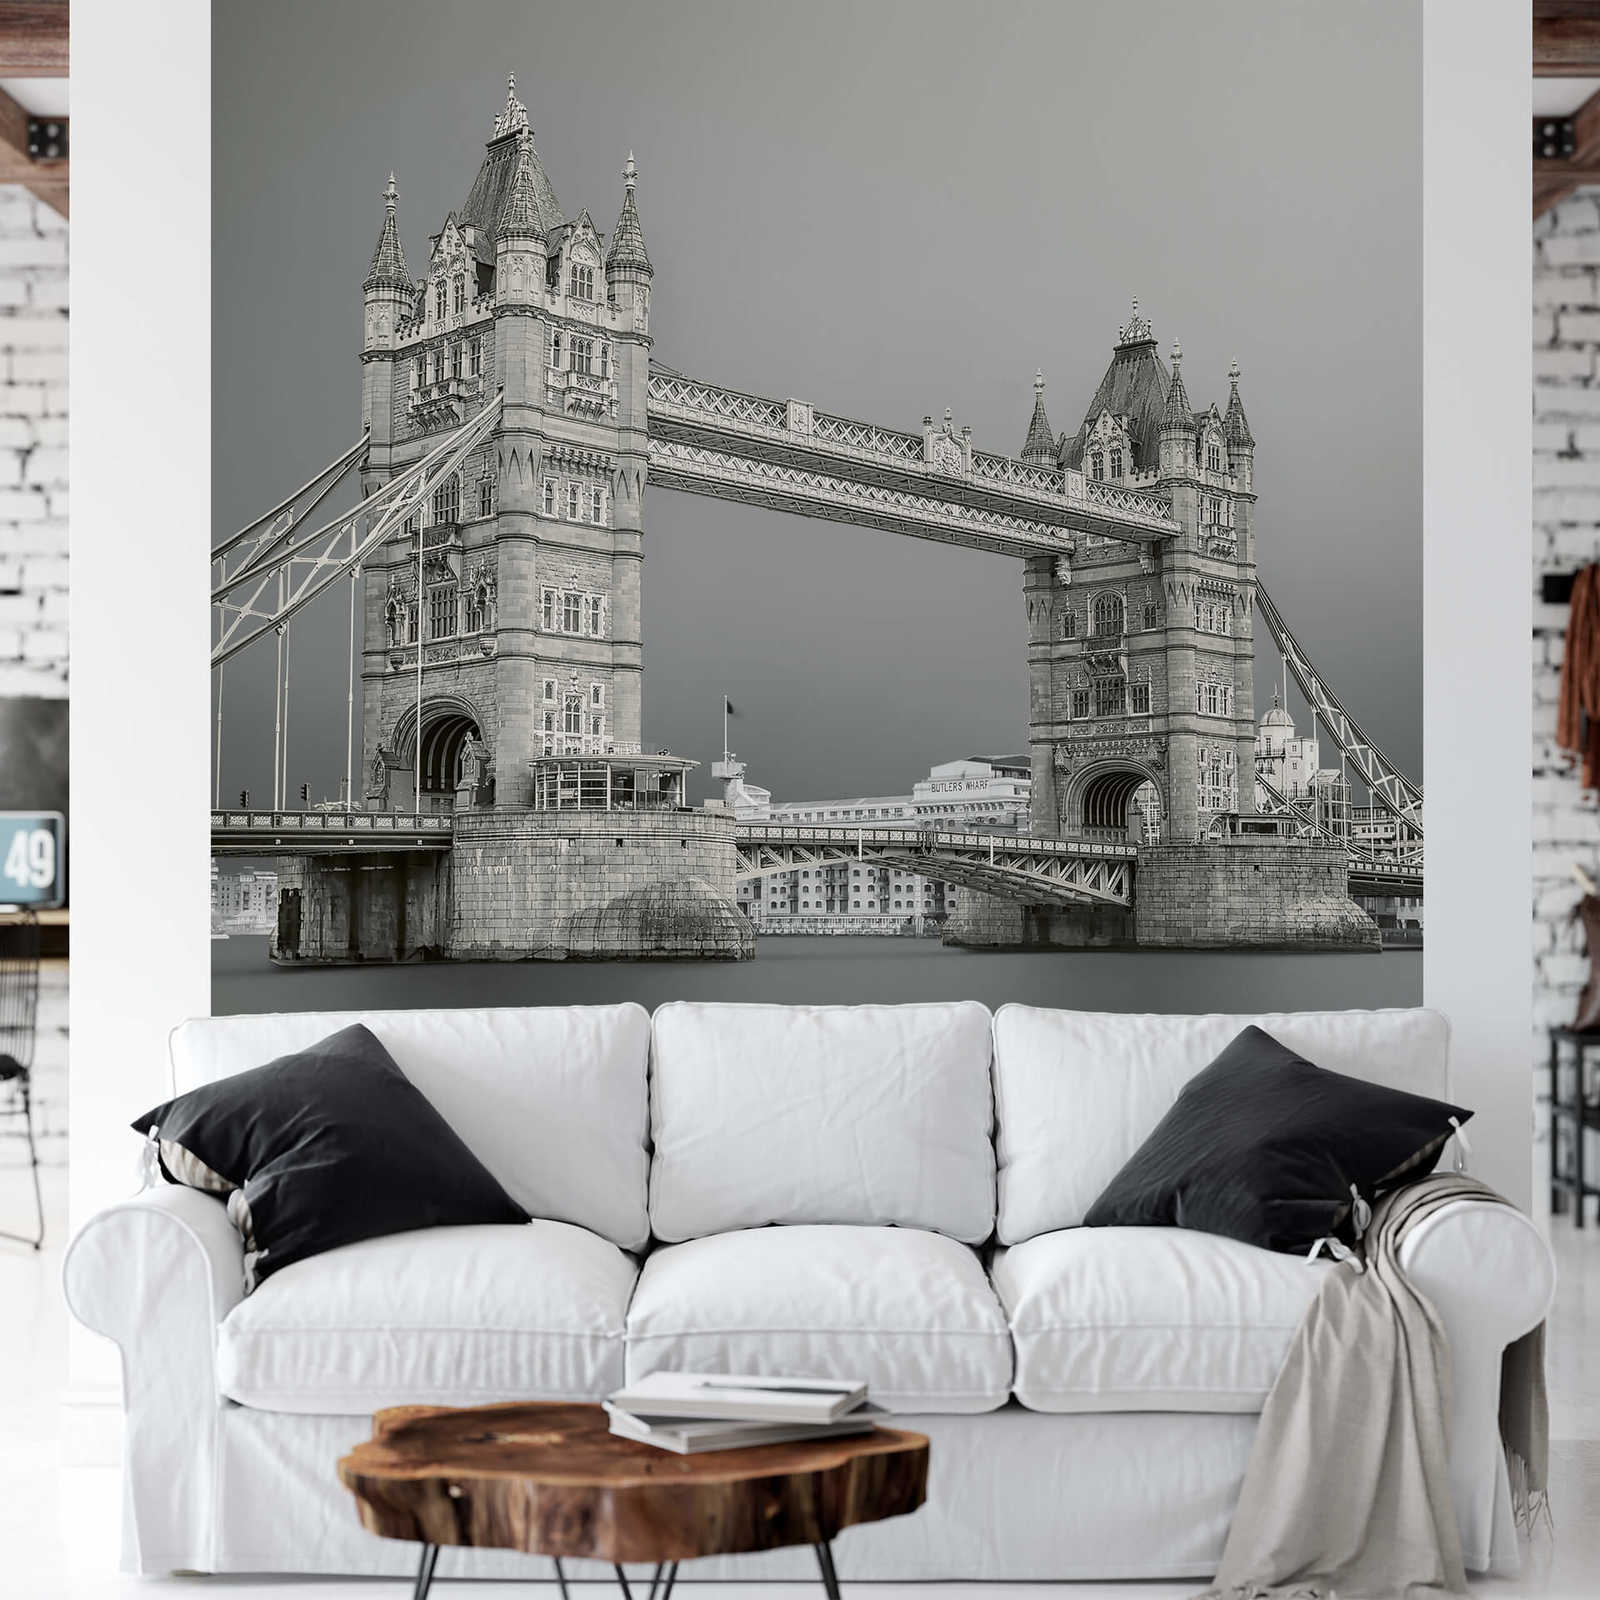             Fototapete London Tower Bridge – Grau, Weiß, Schwarz
        